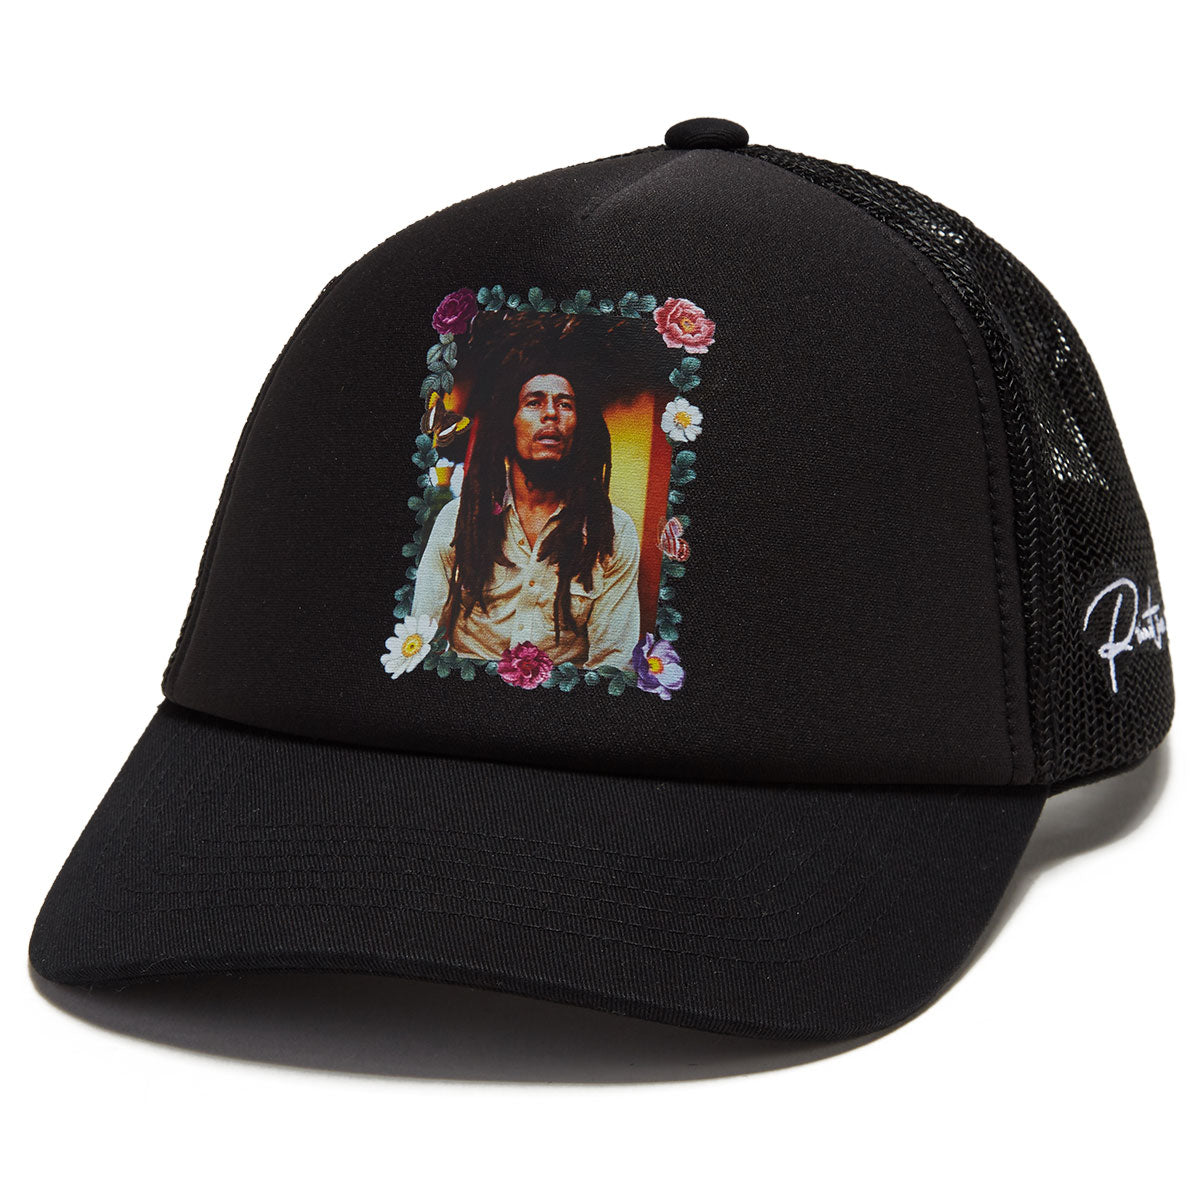 Primitive x Bob Marley Everlasting Trucker Hat - Black image 1